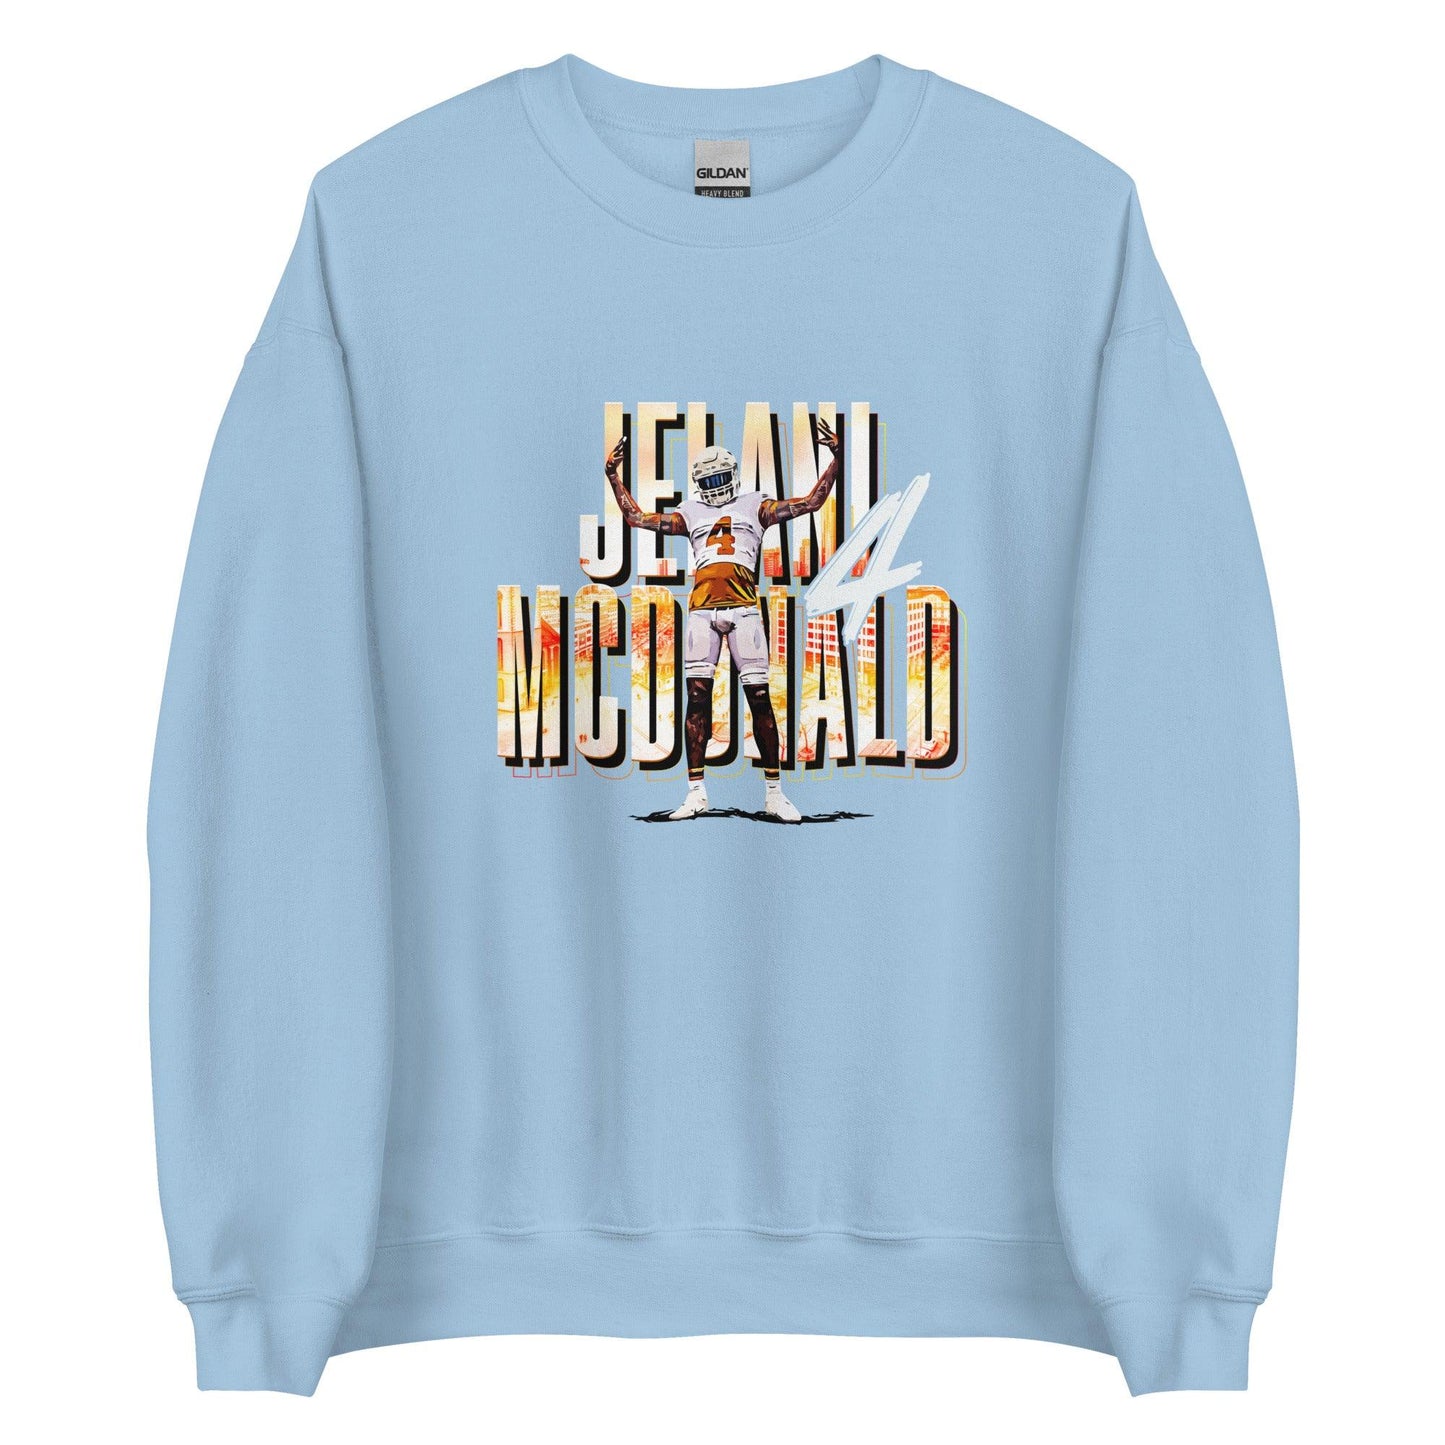 Jelani McDonald "Phenom" Sweatshirt - Fan Arch